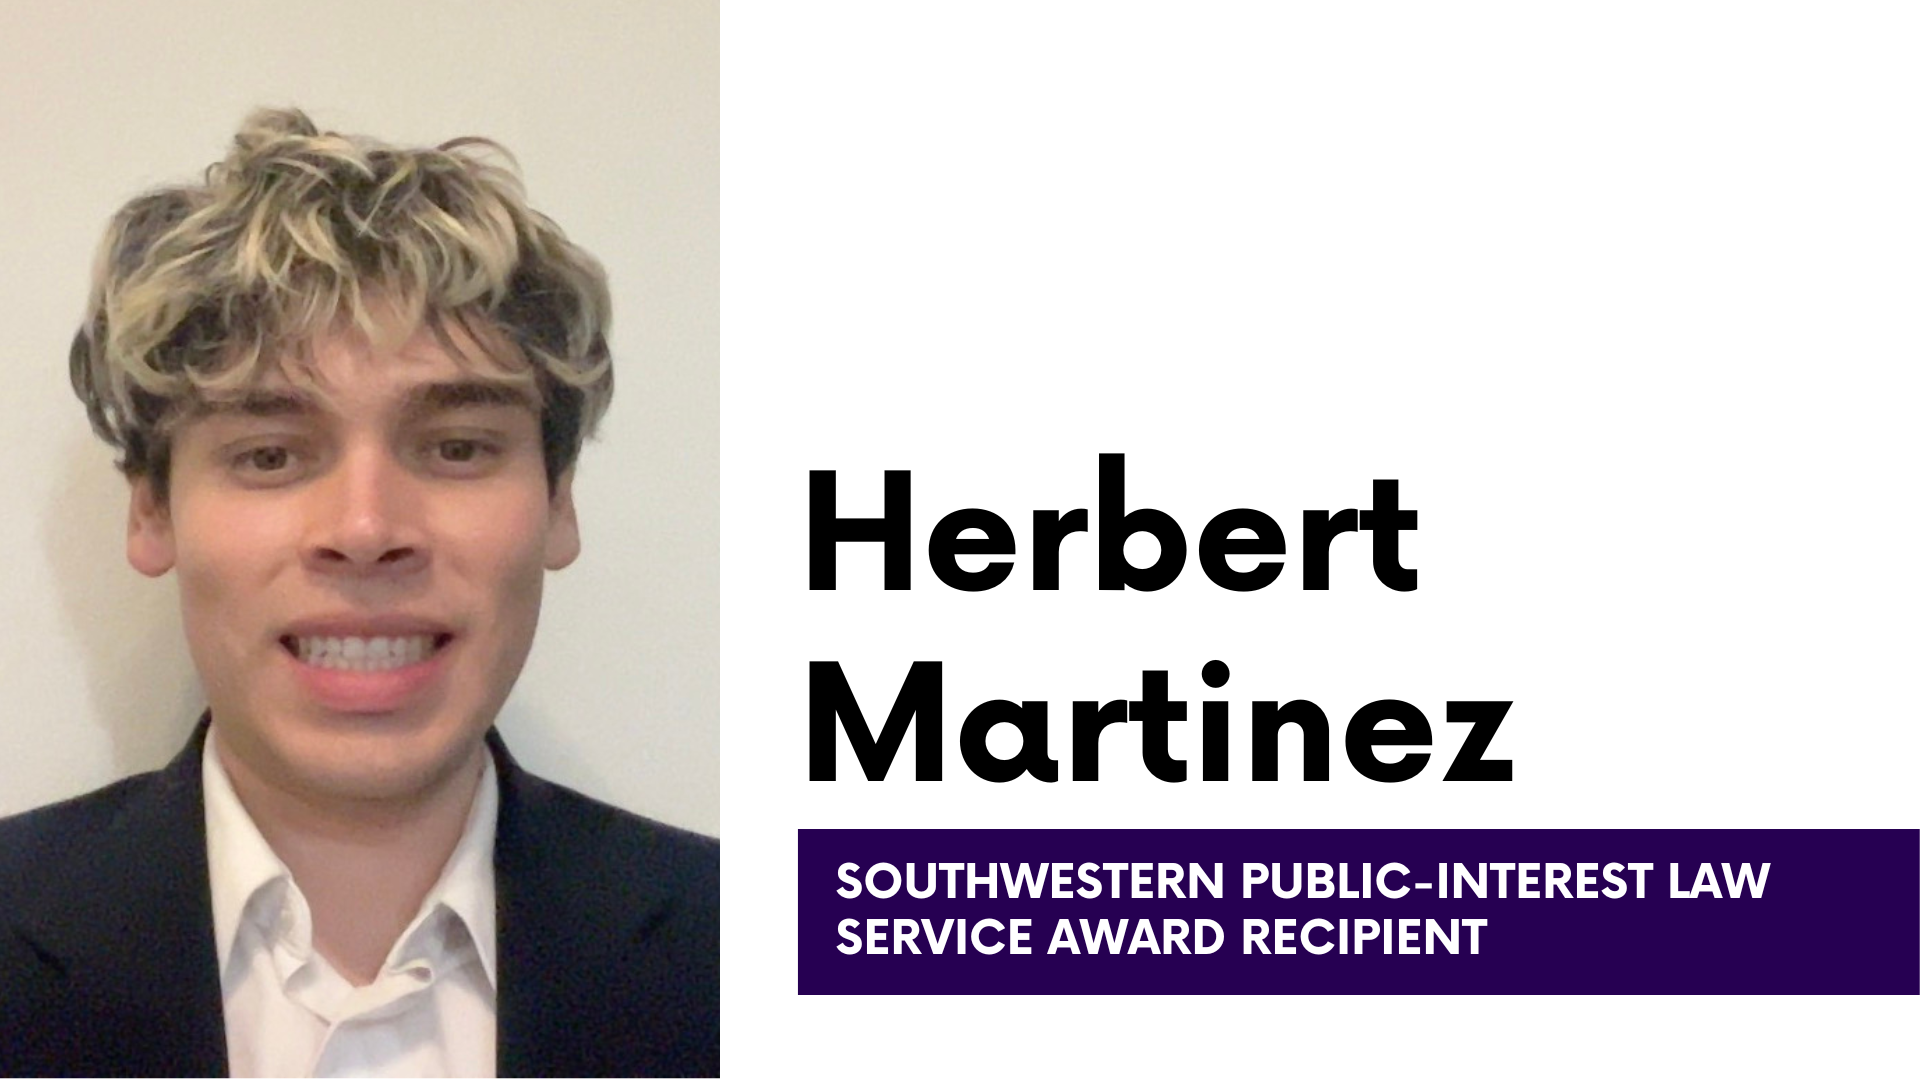 Herbert Martinez headshot with text: Herbert Martinez Southwestern Public-Interest Law Service Award Recipient